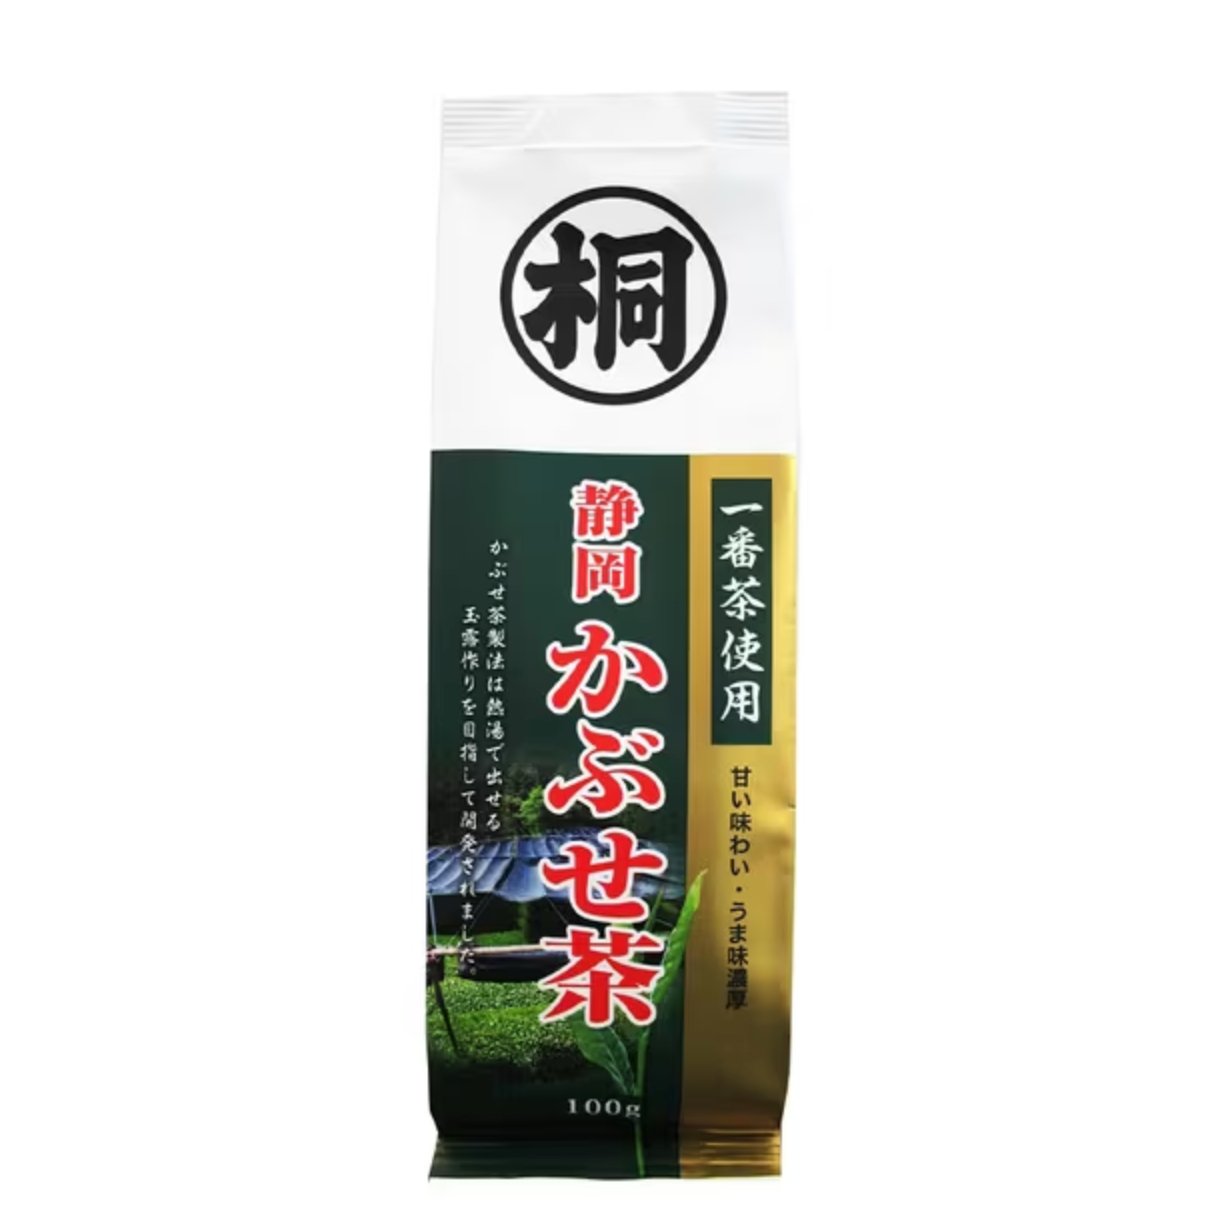 Hagiri Ichibancha Kabuse tea from Shizuoka 100g - NihonMura